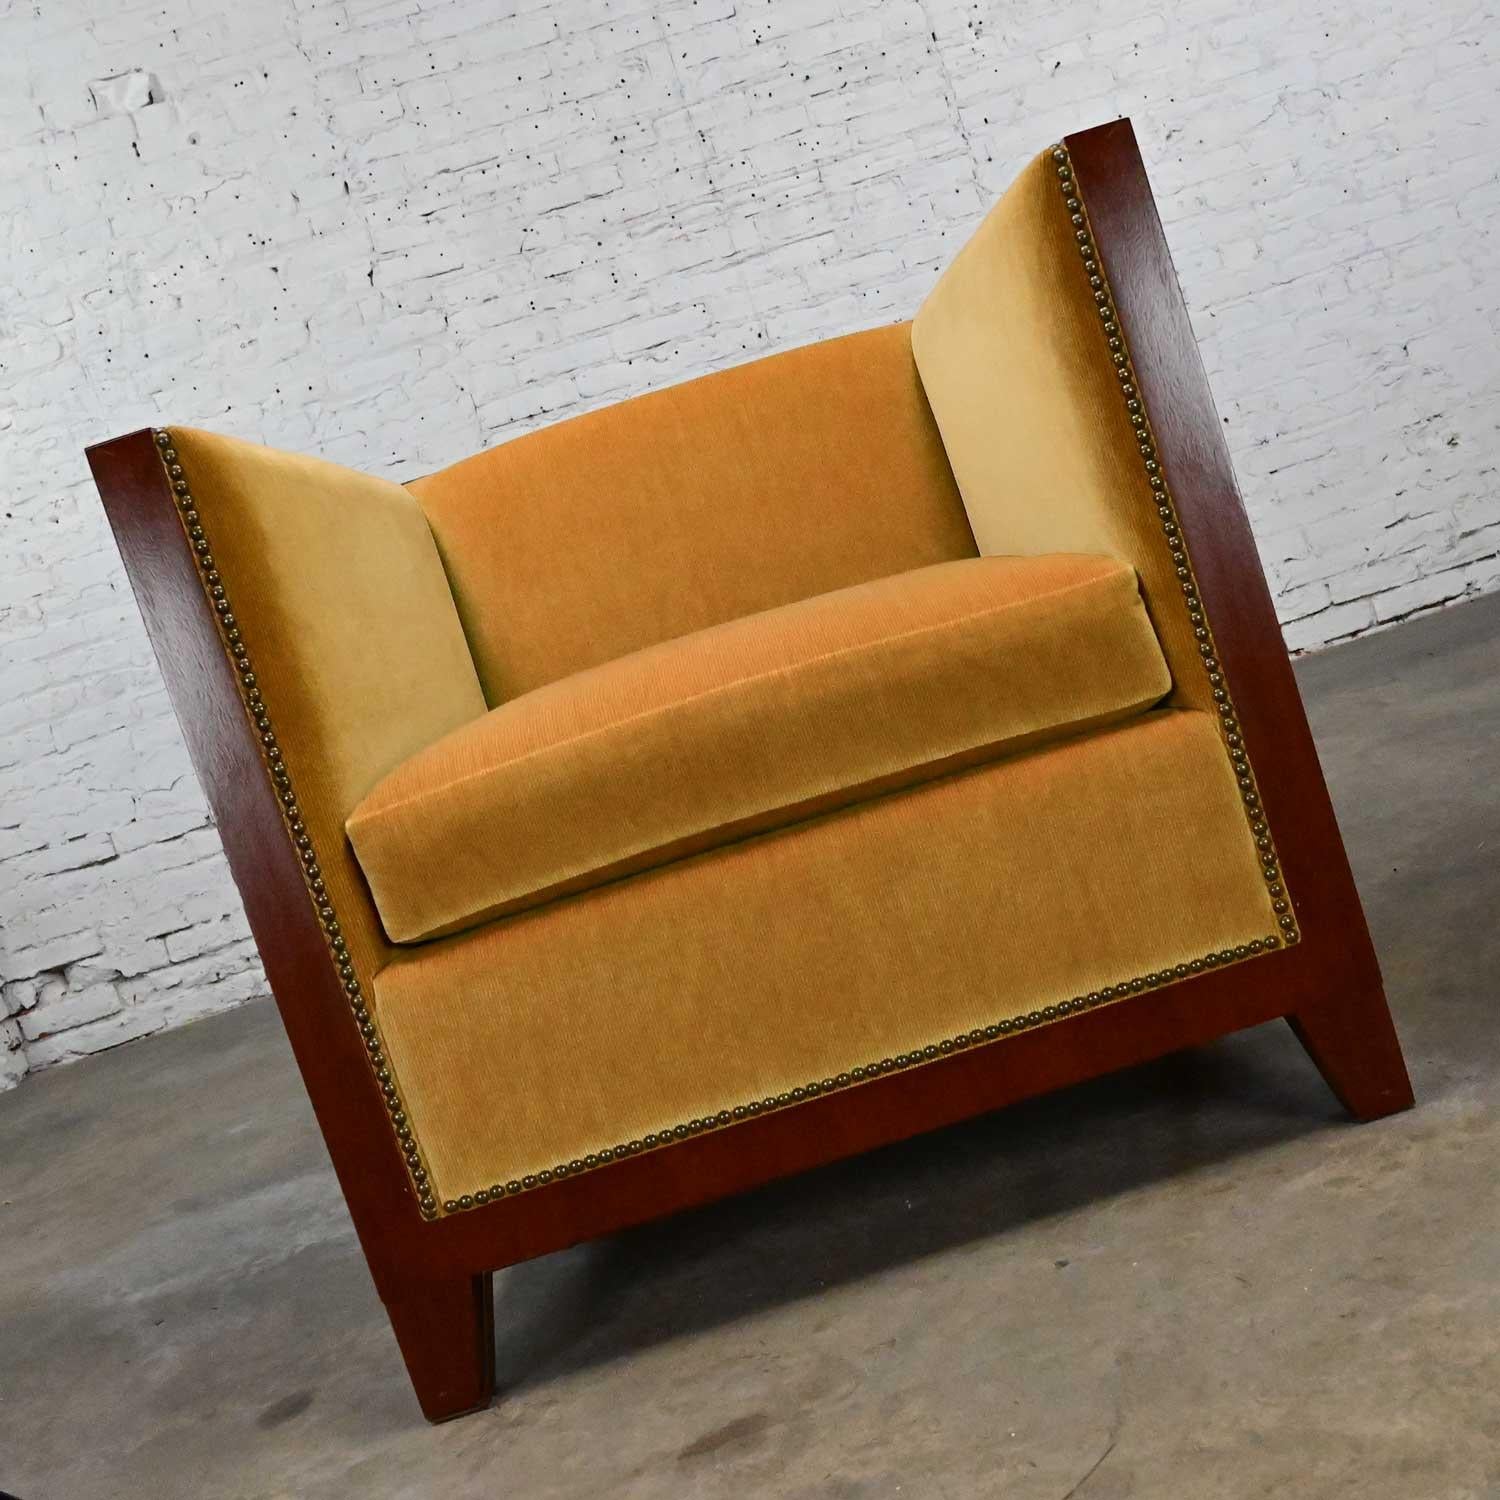 Ende des 20. Jahrhunderts Art Deco Revival Custom Designed Zwei getönten Mahagoni Club Chair (Art déco) im Angebot